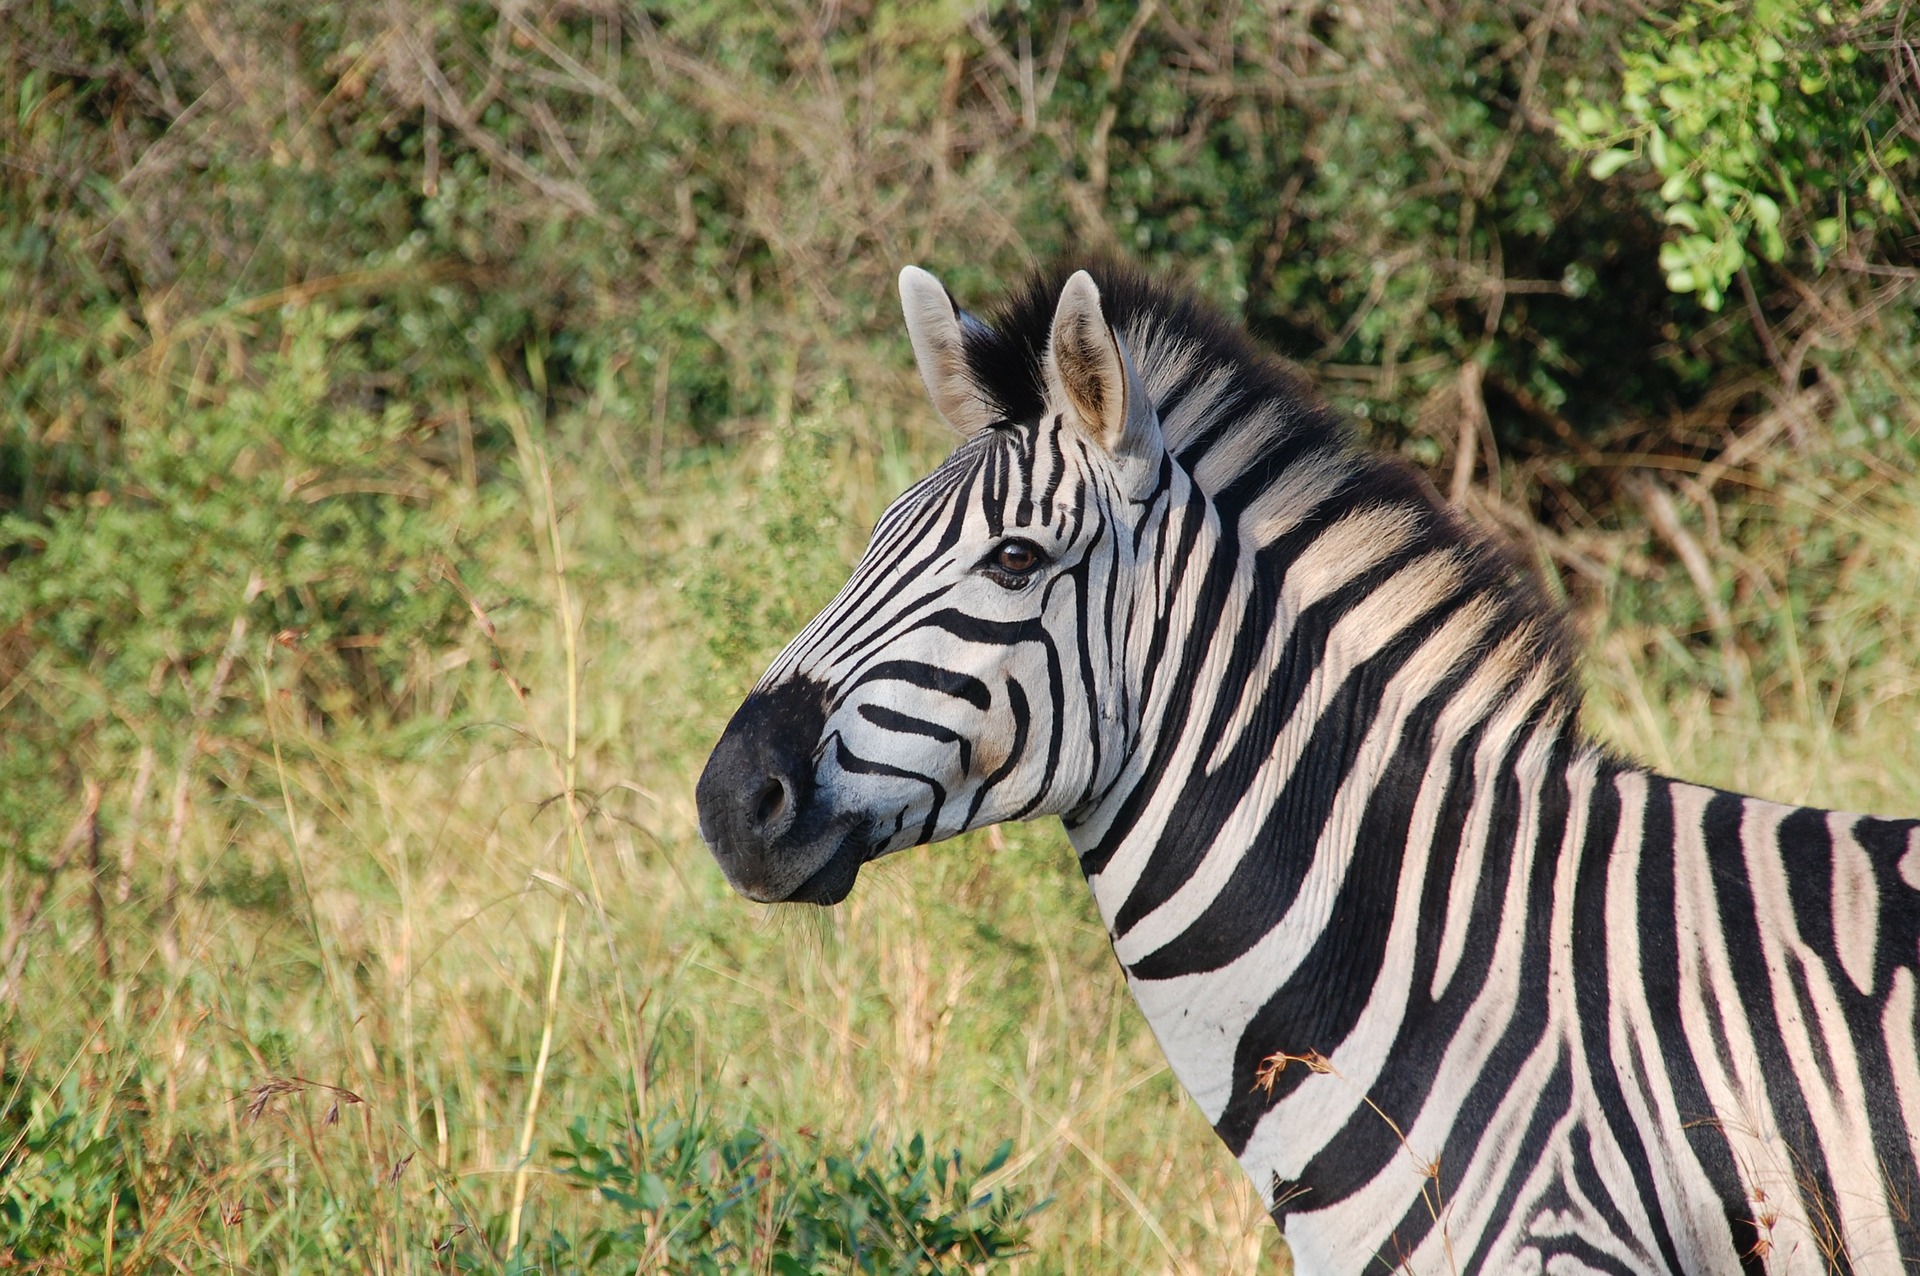 https://pixabay.com/en/south-africa-wild-nature-wildlife-163052/